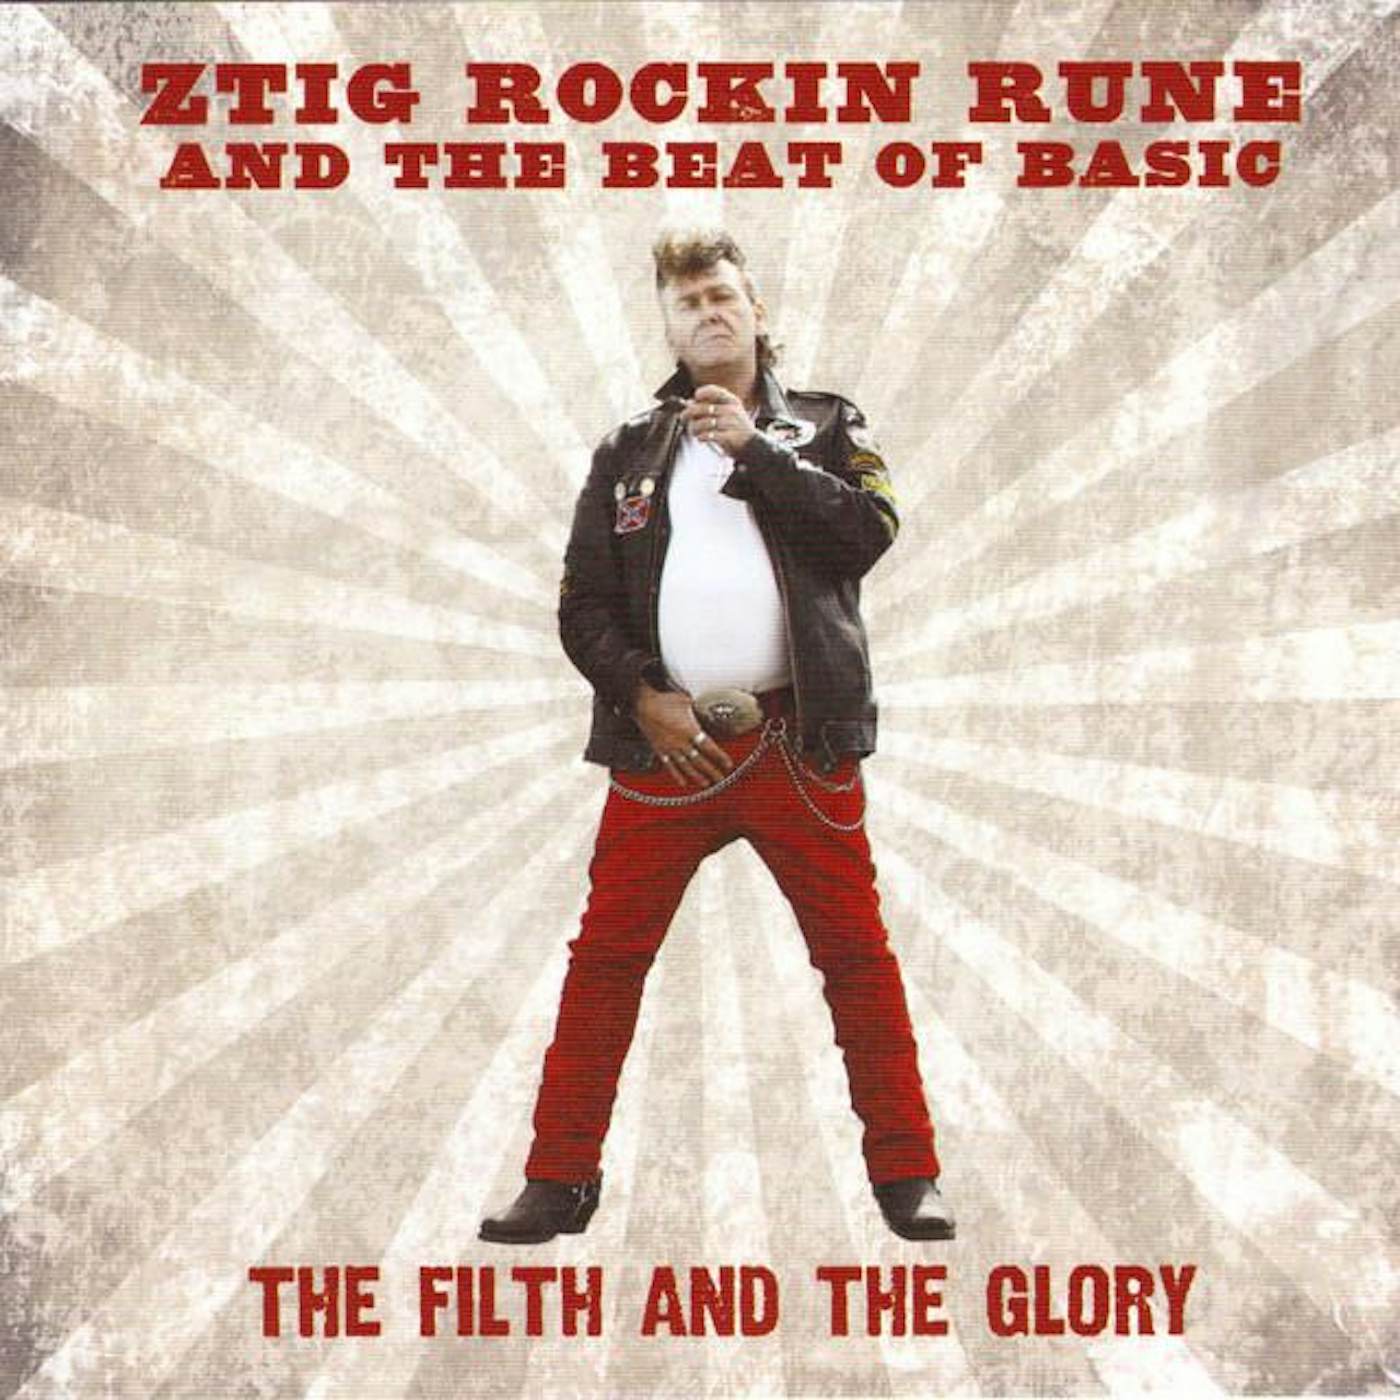 Ztig Rockin Rune and the beat of basic